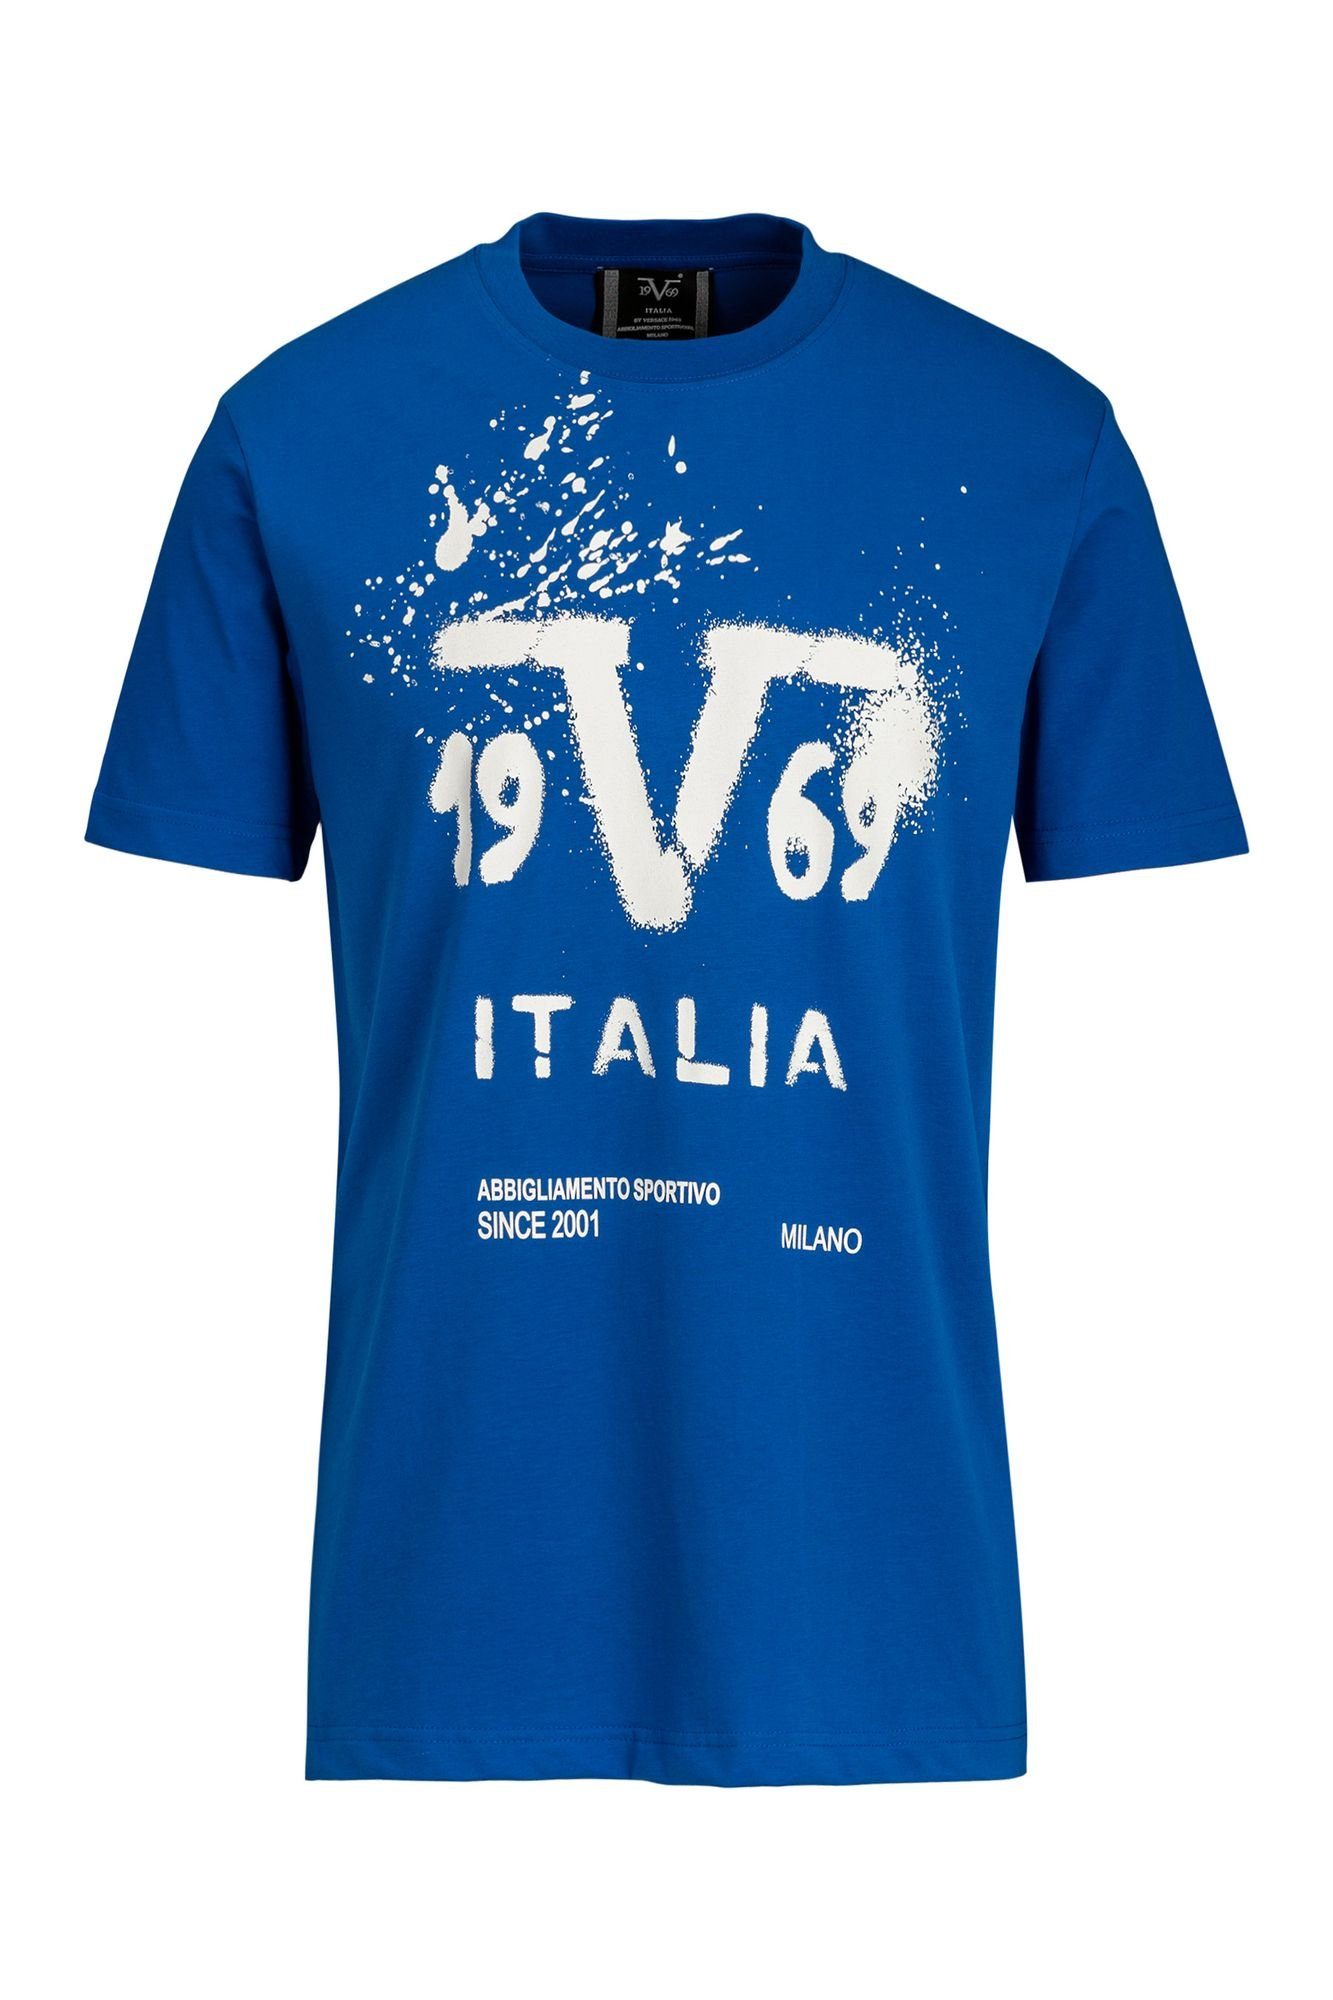 19V69 Italia by Versace T-Shirt Franco